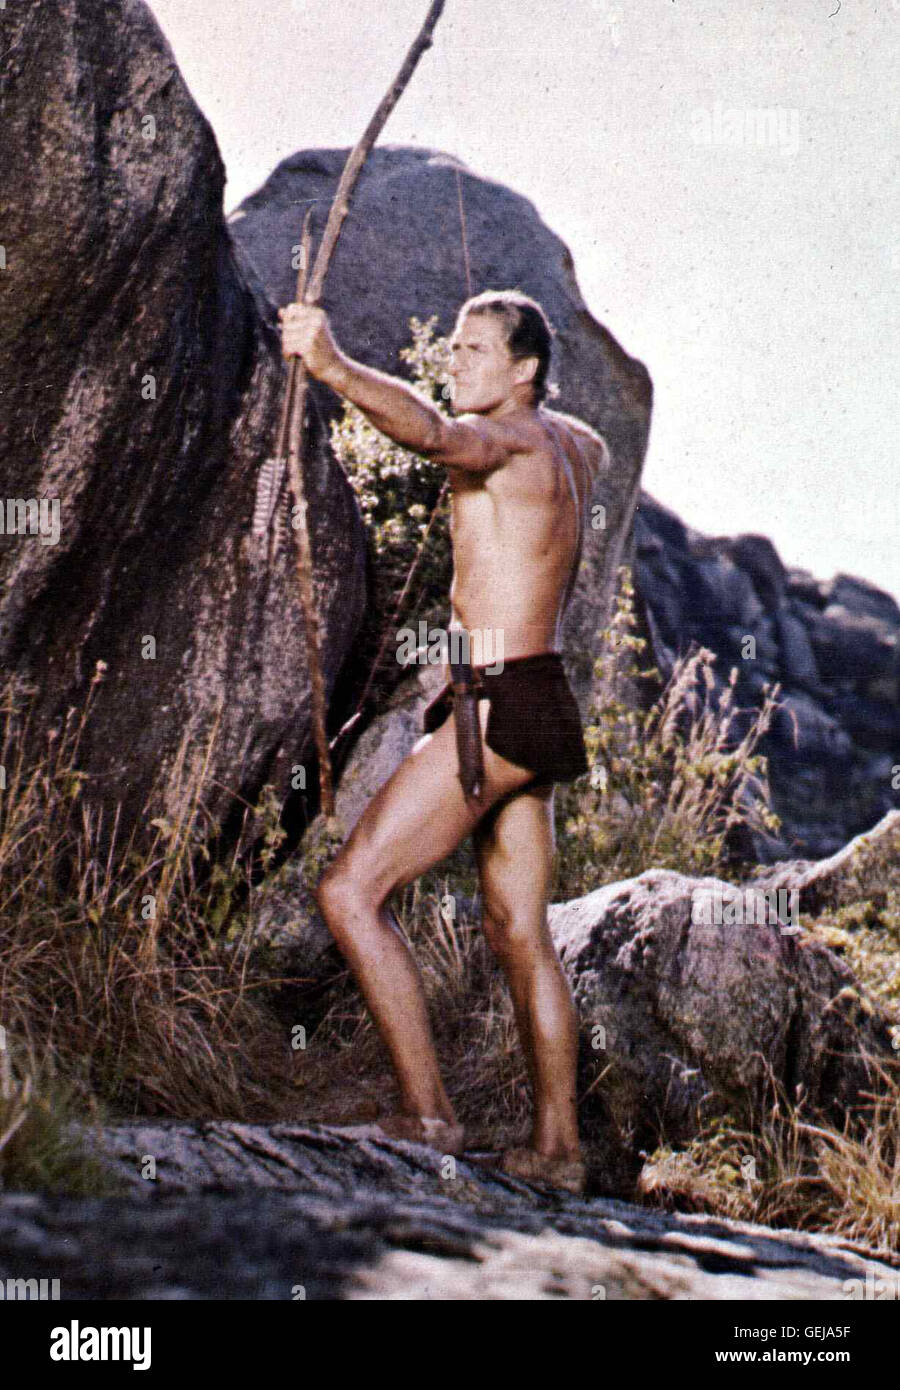 Jock Mahoney   Tarzan (Jock Mahoney) macht sich mit Pfeil und Bogen auf den weiten Weg nach Indien, um eine Elefantenherde zu retten. *** Local Caption *** 1962, Tarzan Goes To India, Tarzan Erobert Indien Stock Photo